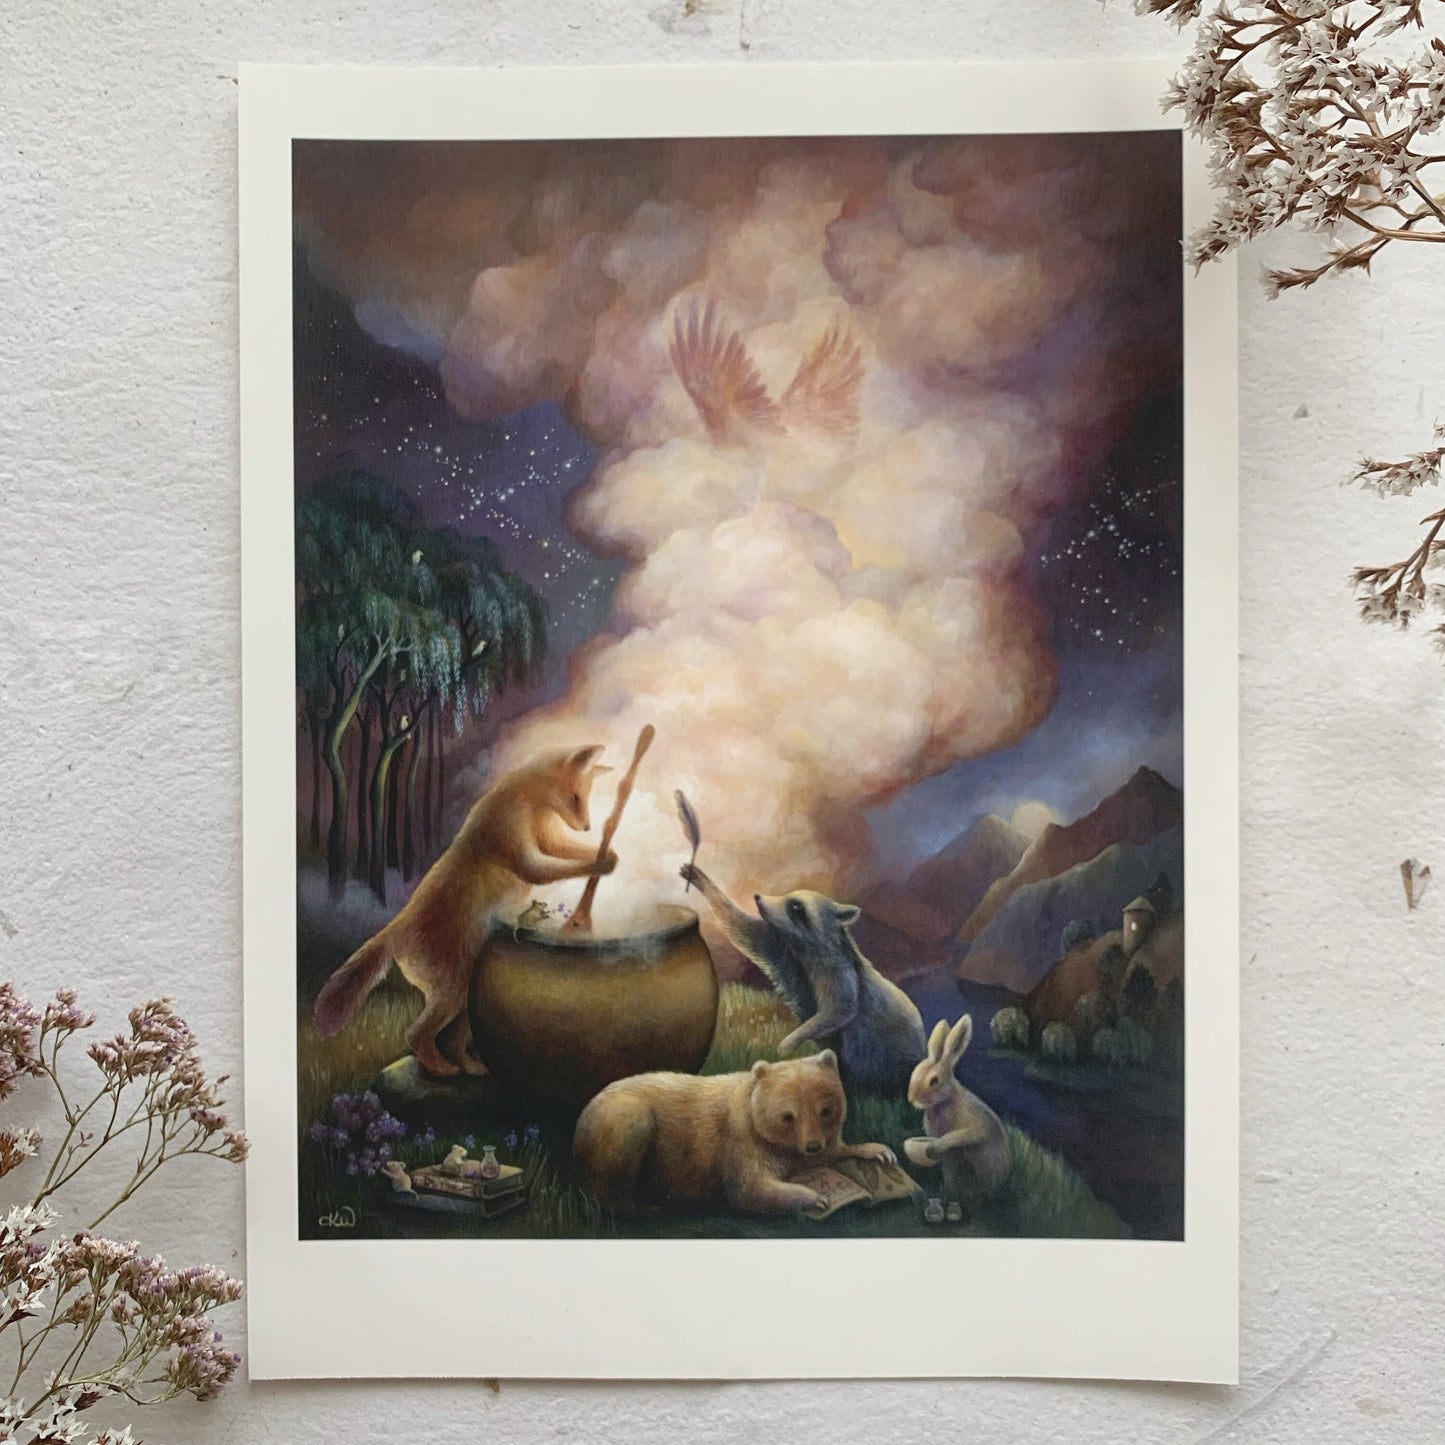 Limited Edition "Enchantment” 9x12 print